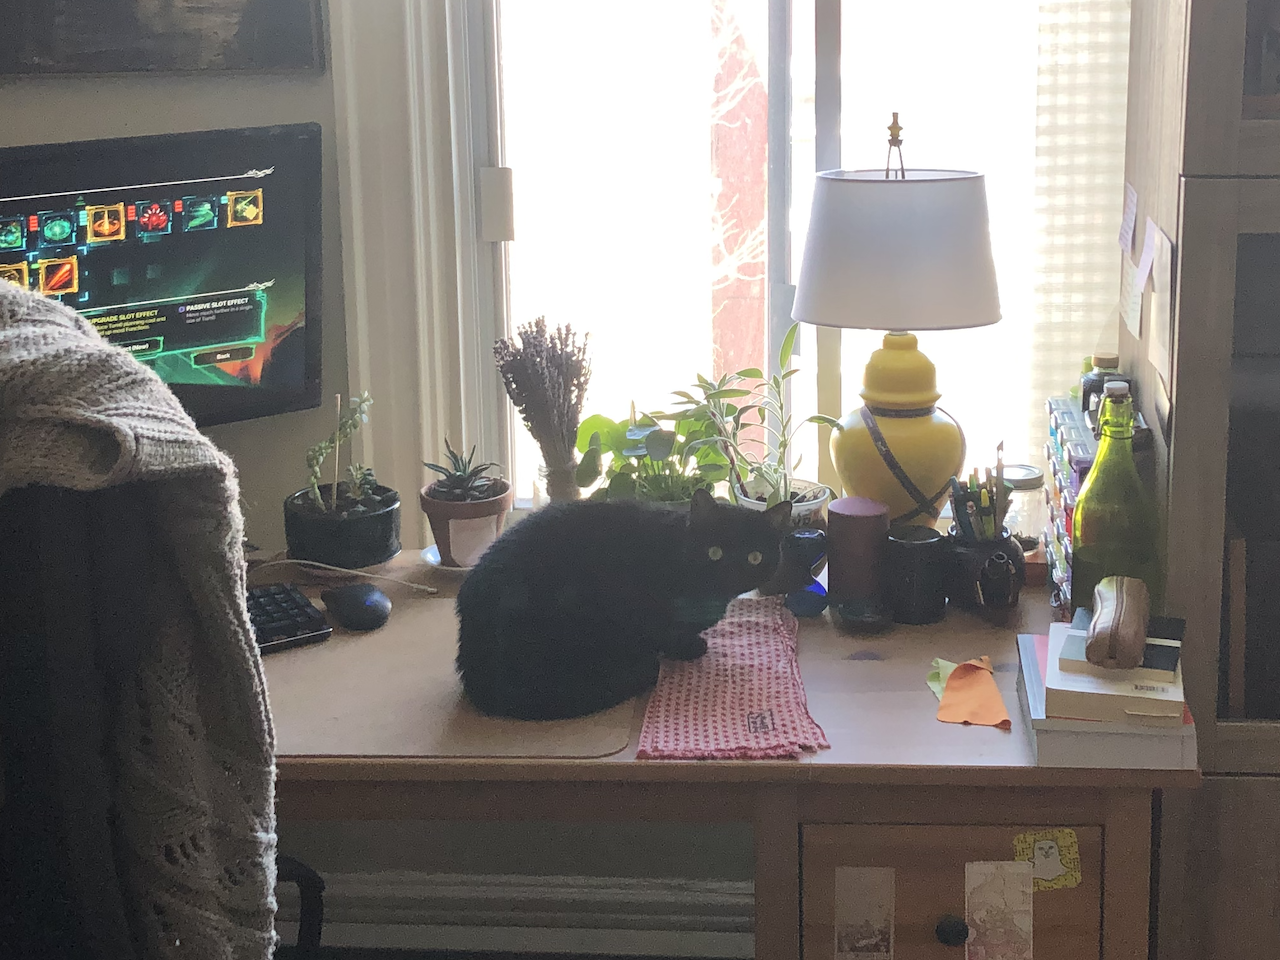 A photo of my black cat Luna sitting on my desk. 